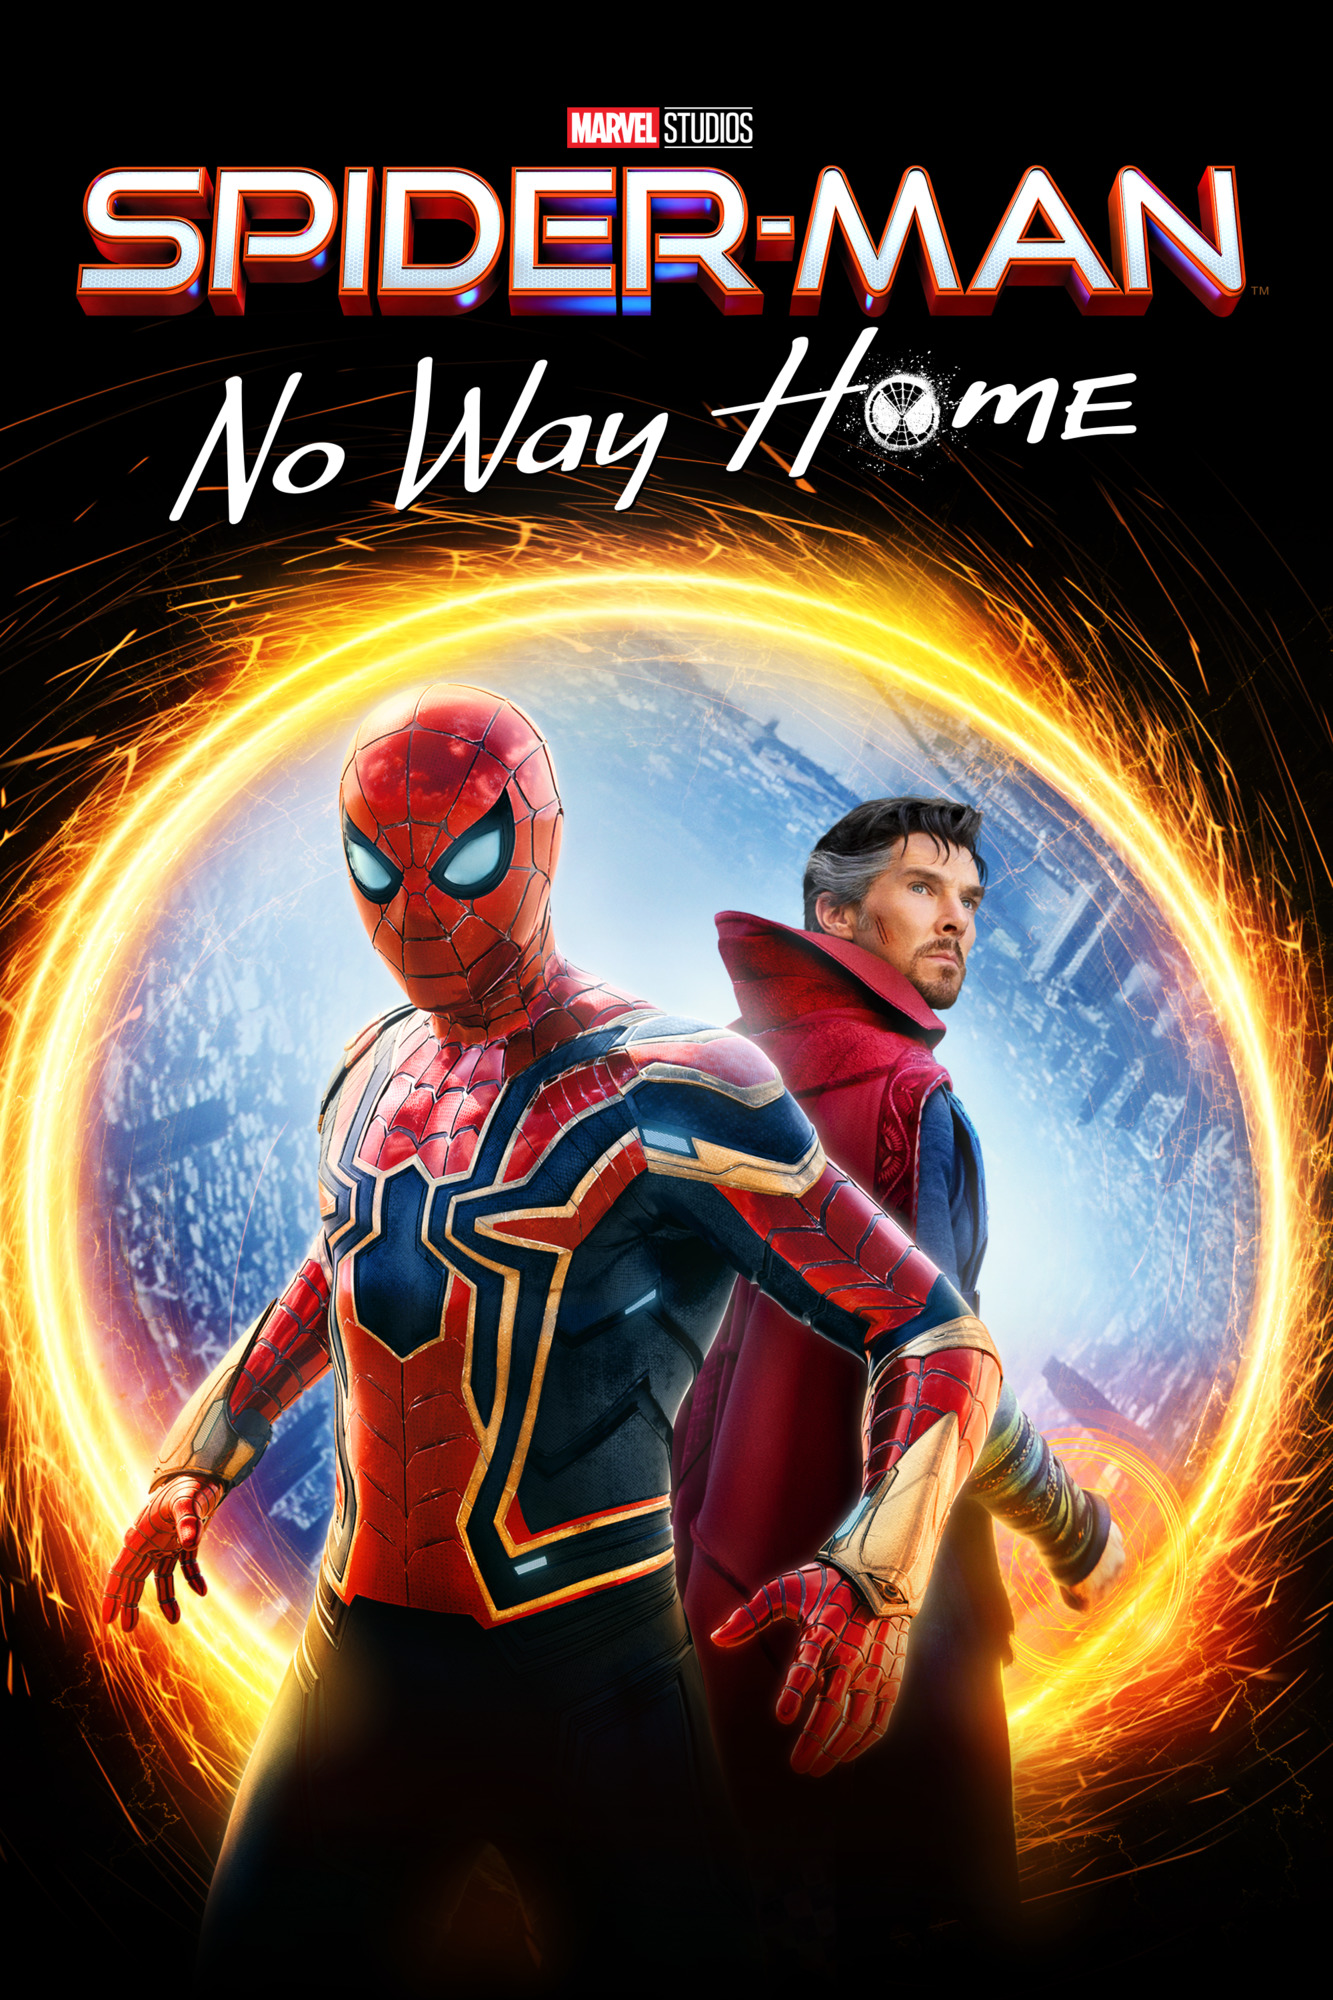 No way home poster